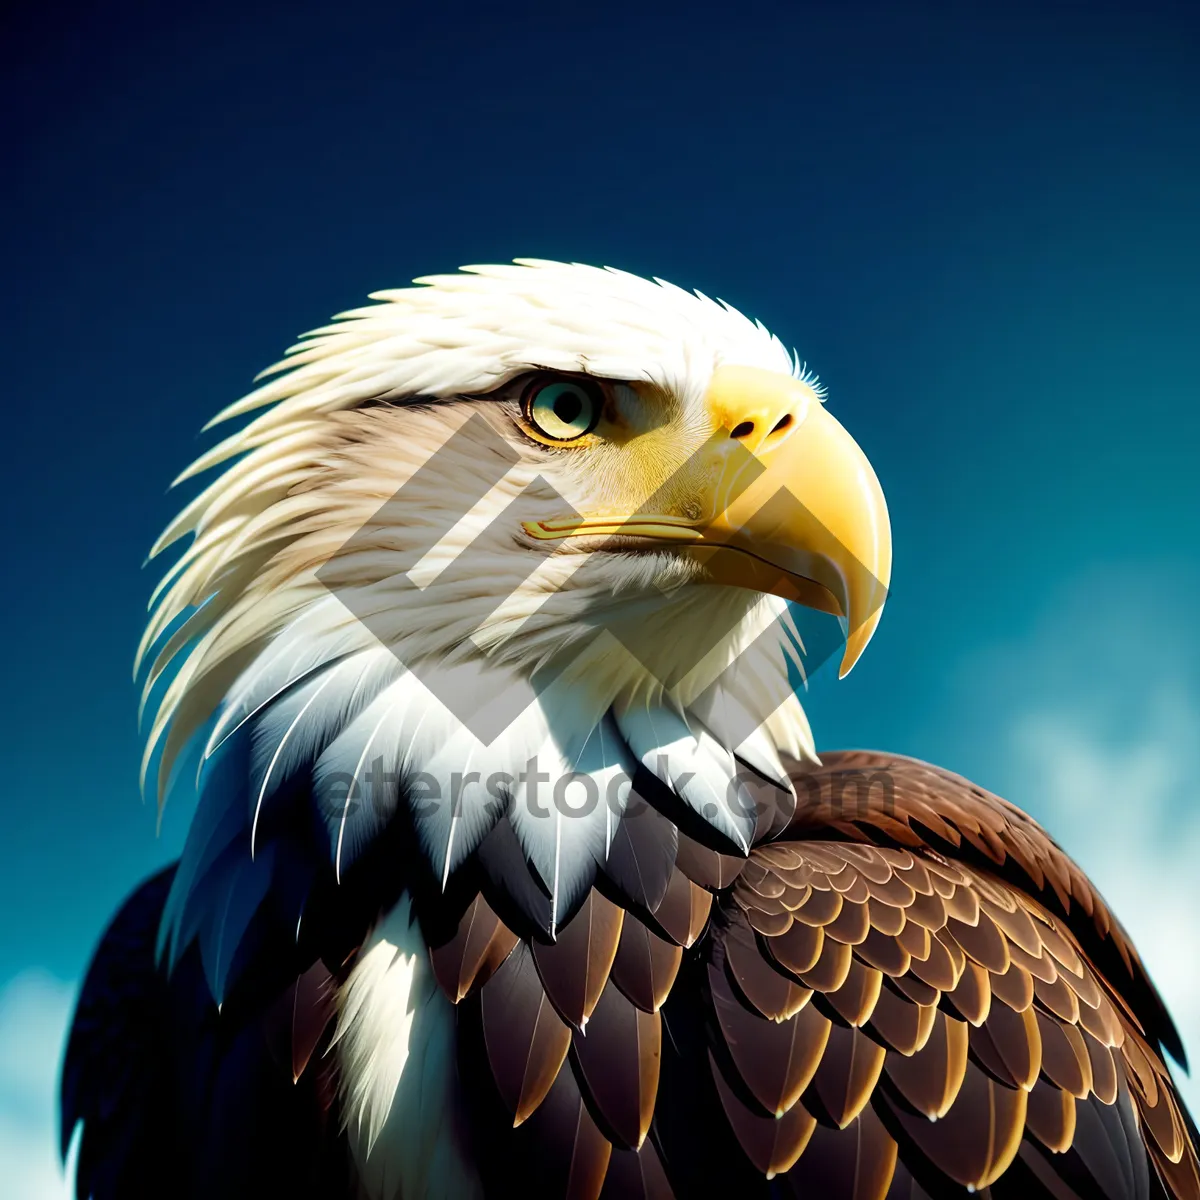 Picture of Bald Eagle Eye - Majestic Predator in Nature